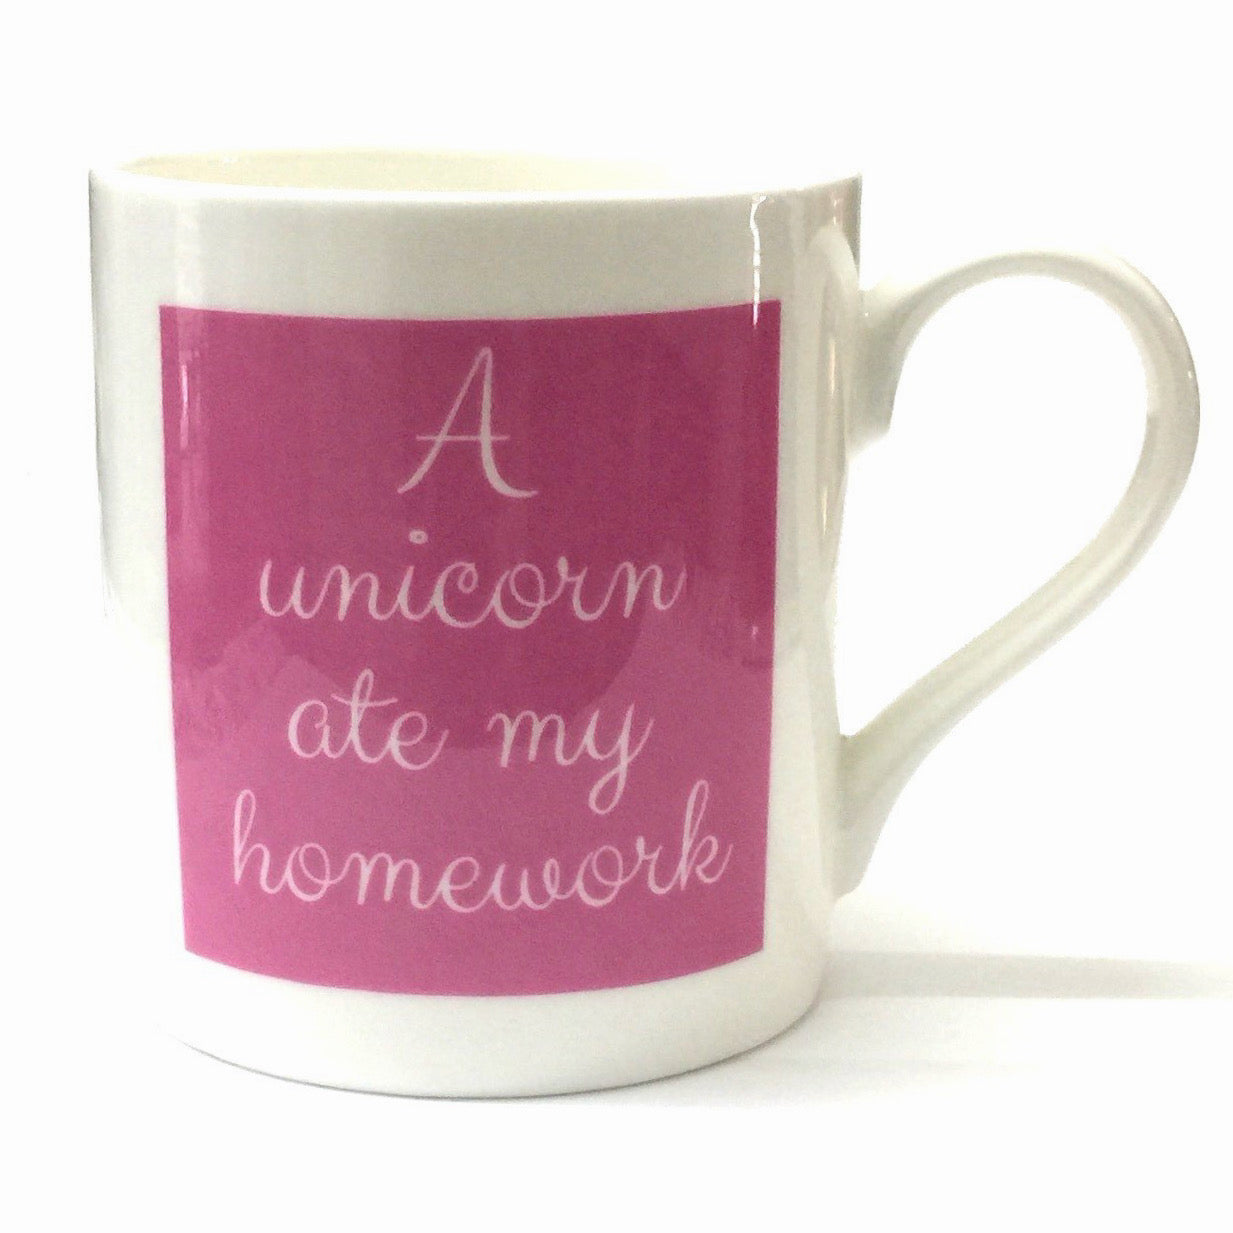 "Unicorn Ate My Homework" Mug - The Nancy Smillie Shop - Art, Jewellery & Designer Gifts Glasgow